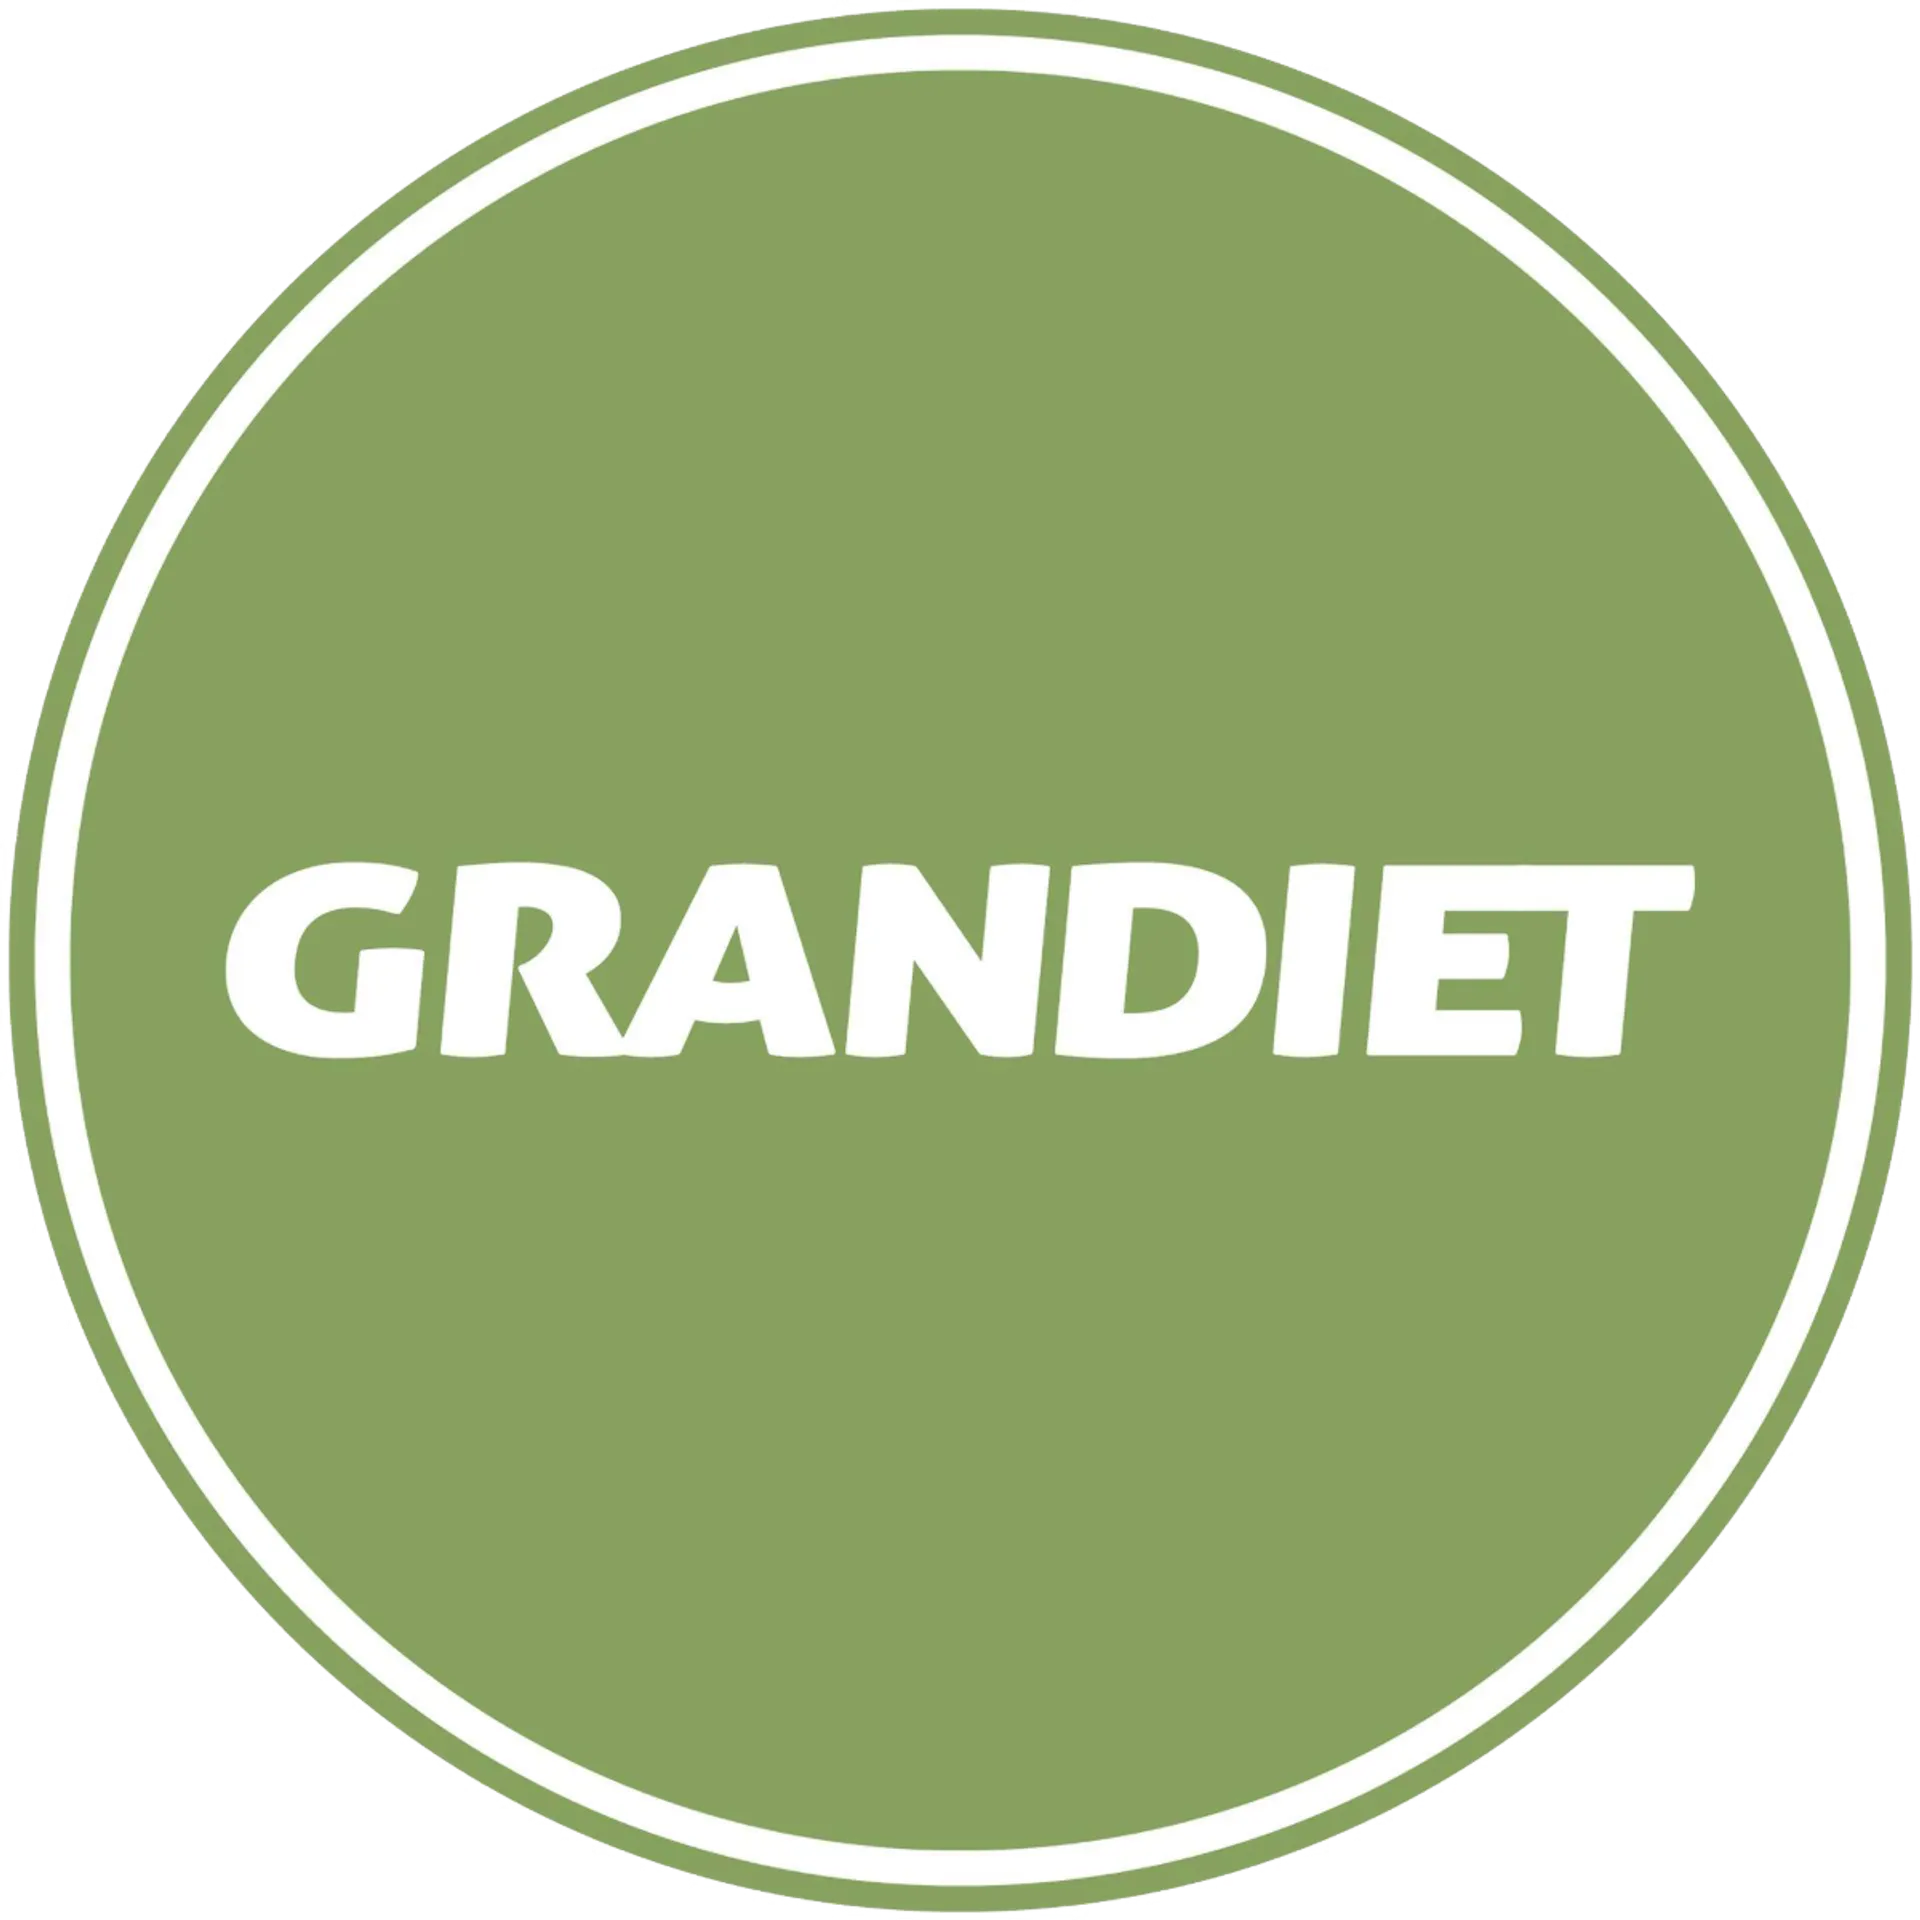 GRANDIET logo